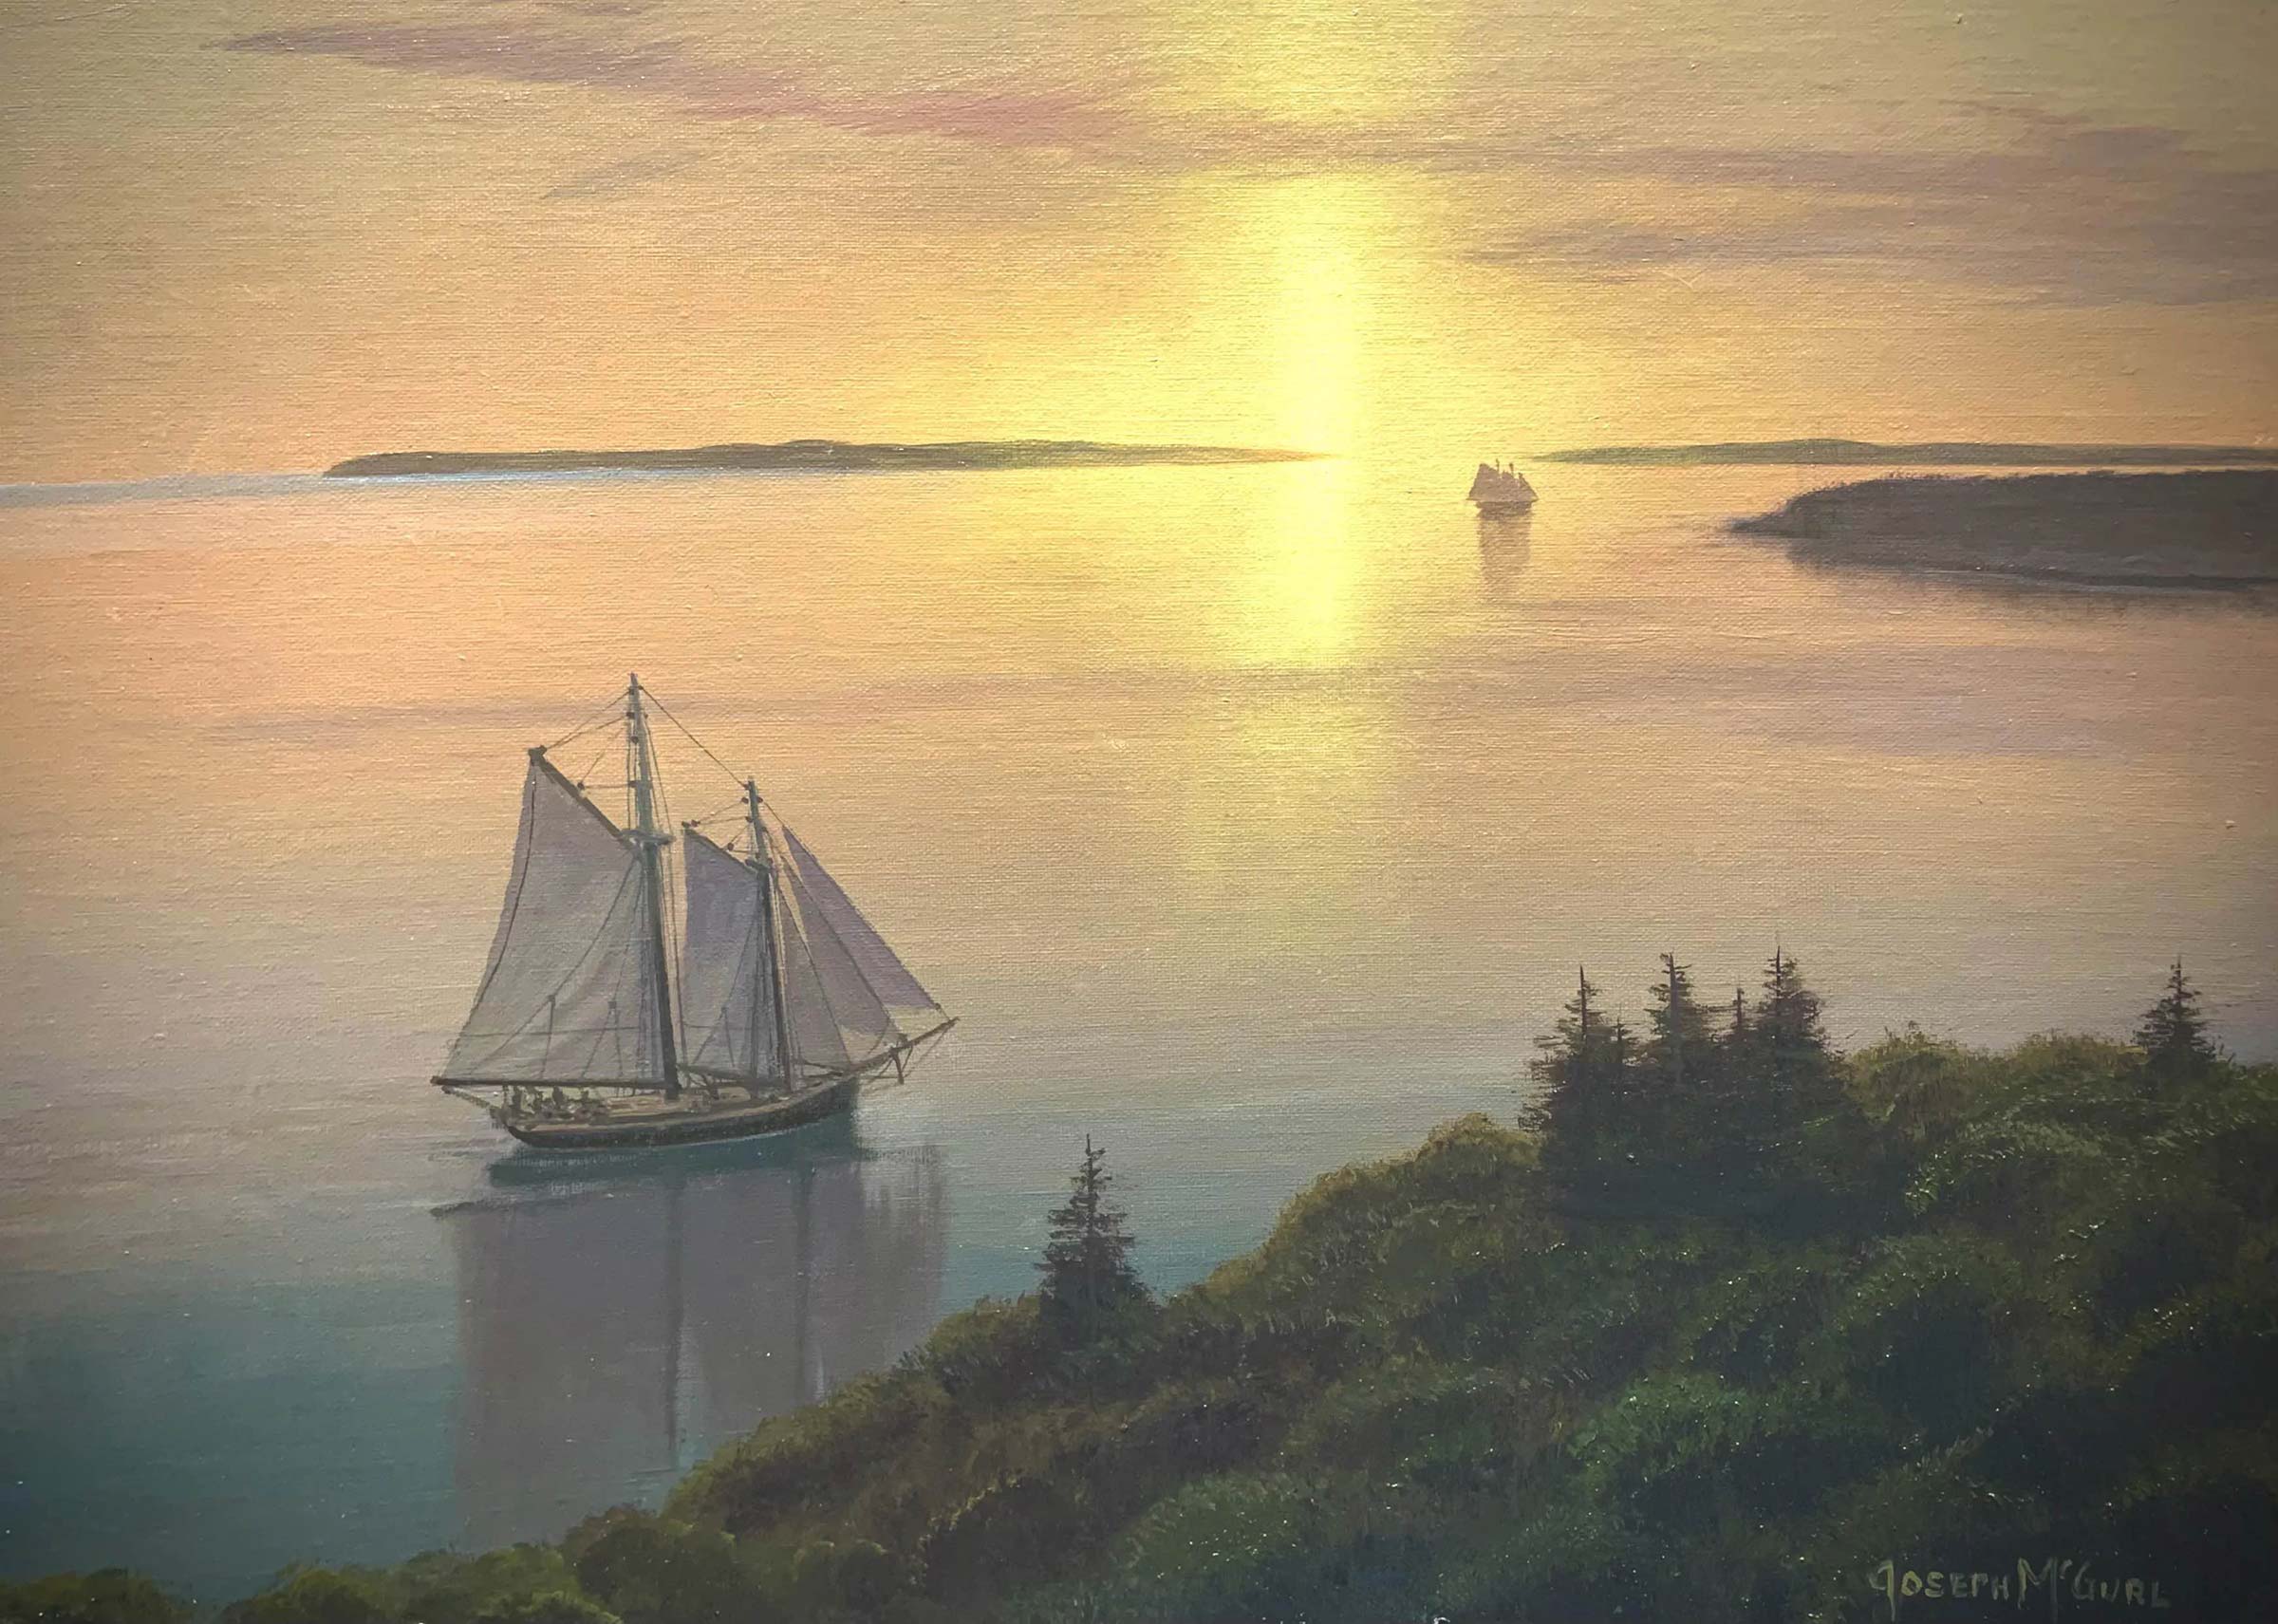 Joseph McGurl, 'Becalmed at Sunset,' oil on canvas, $6,000-$9,000